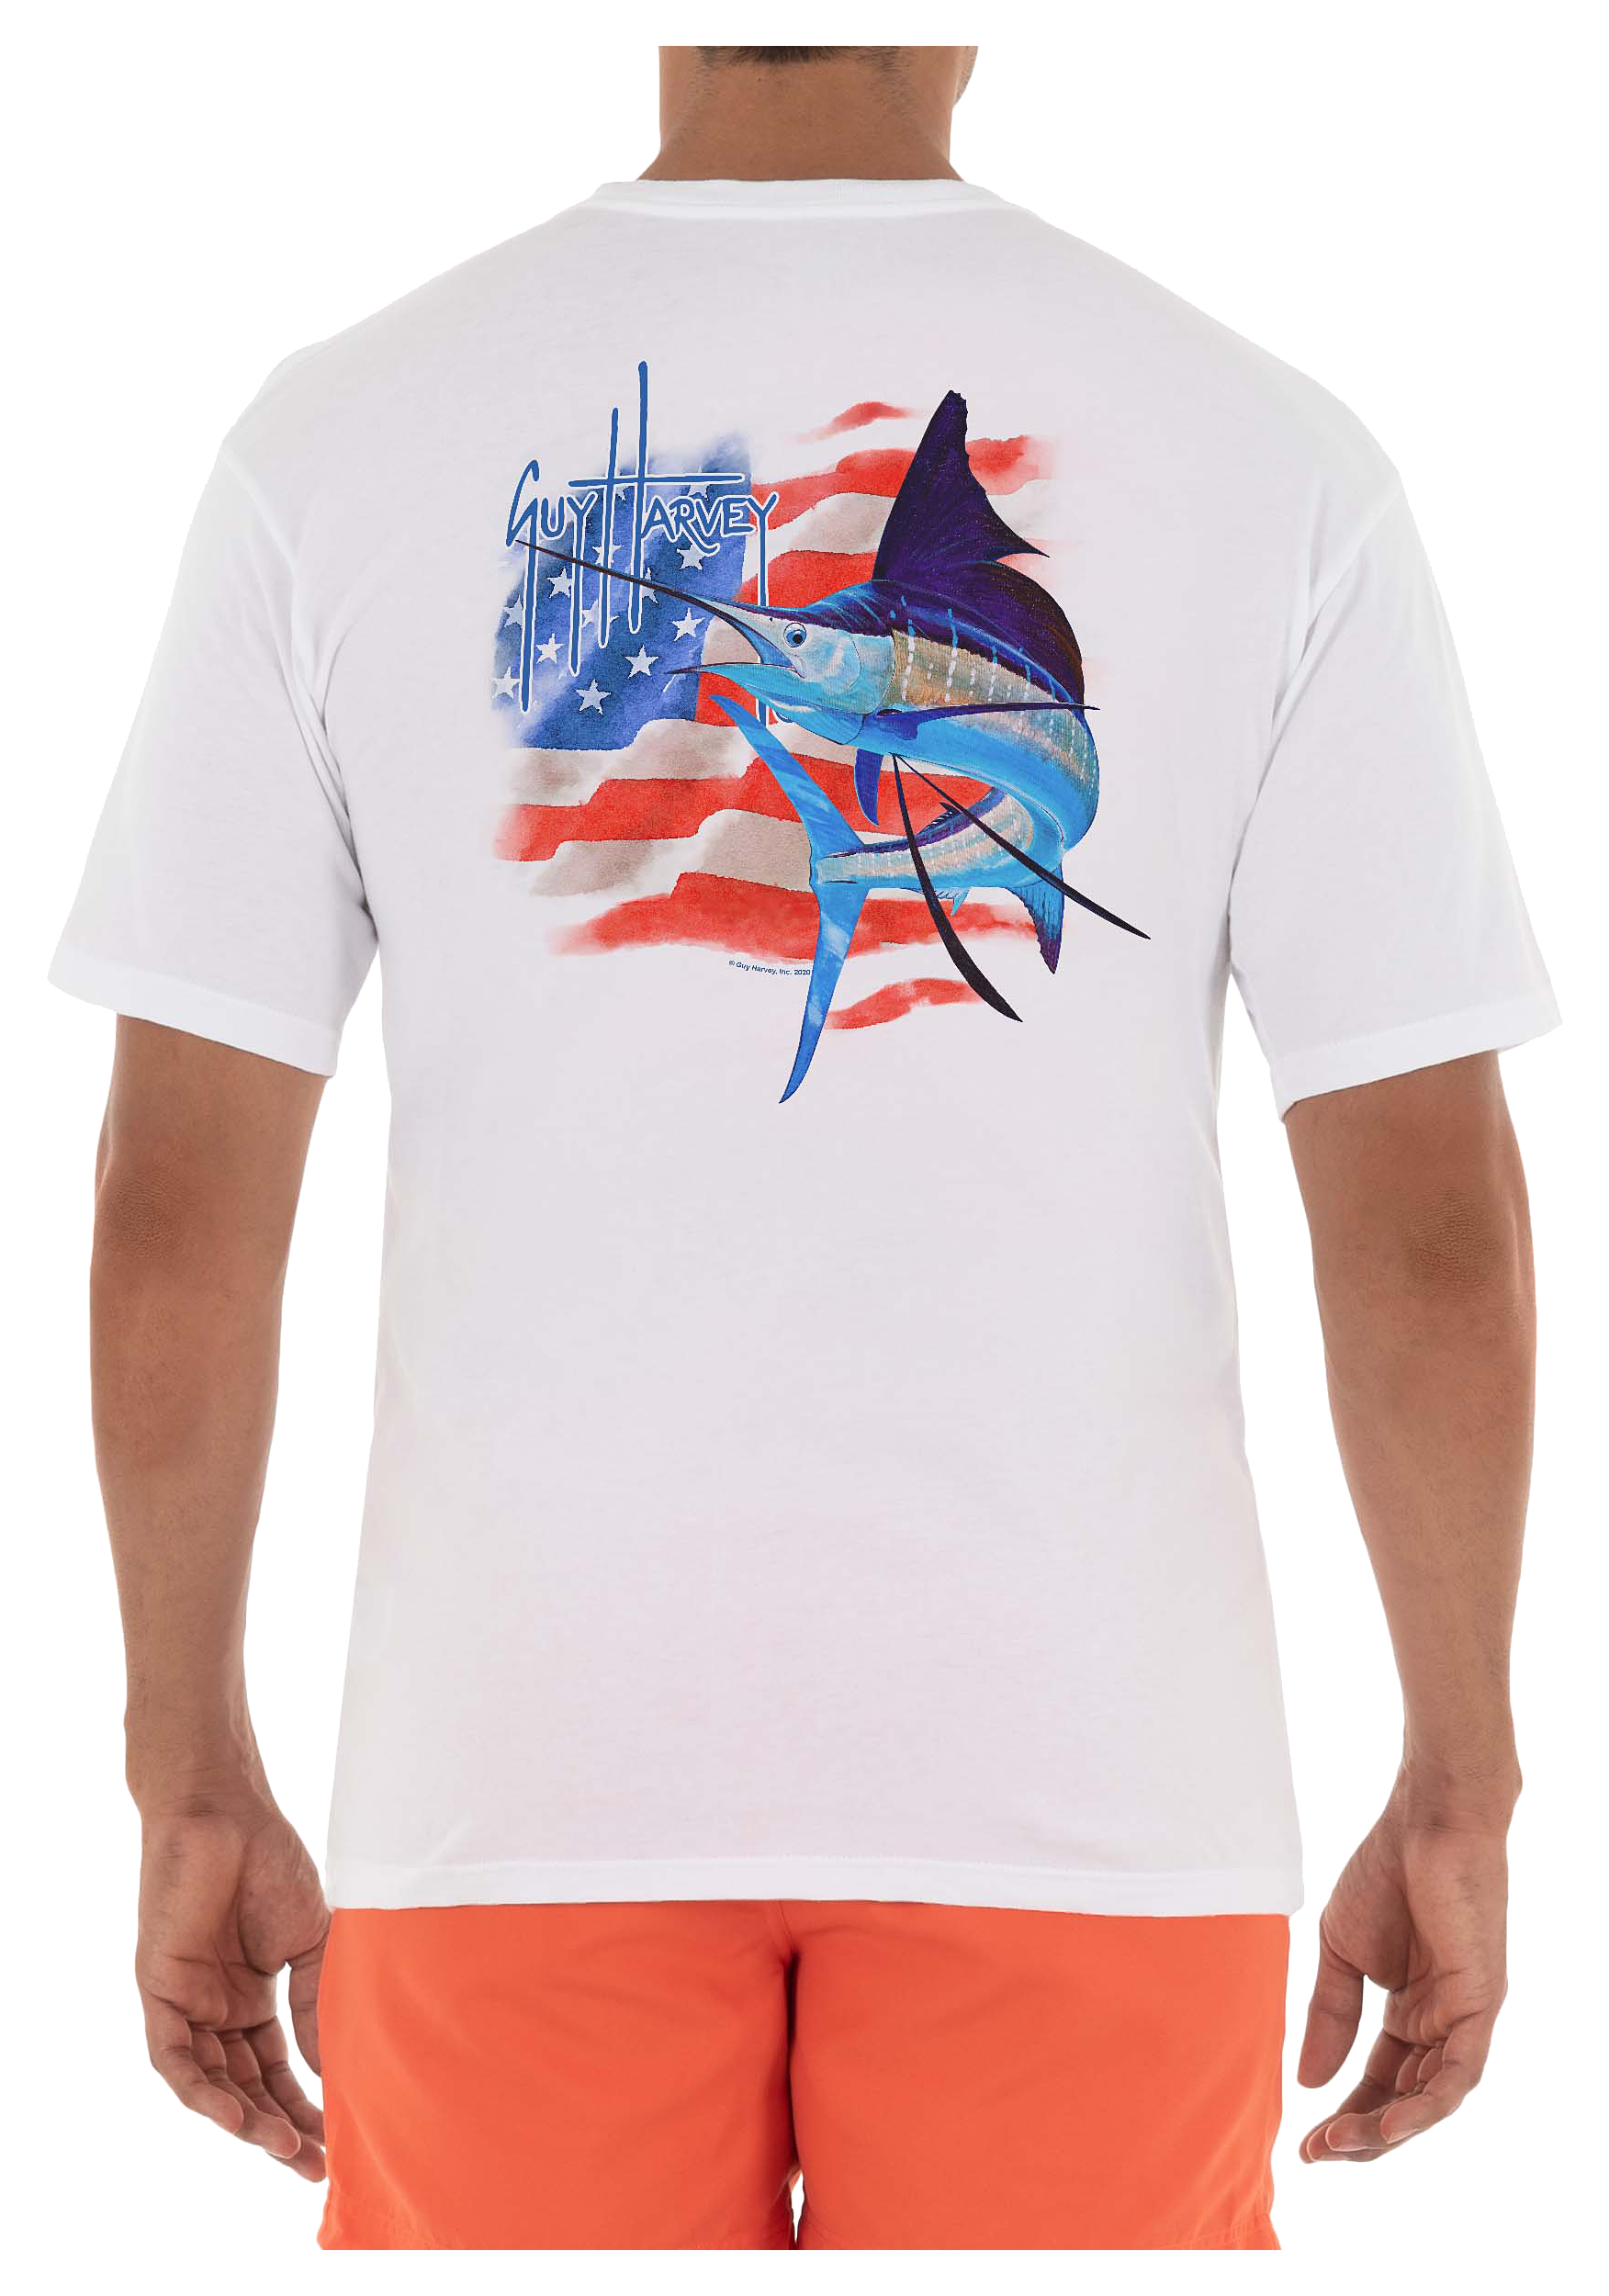 Guy Harvey Men's Patriotic Turn Short Sleeve Pocket T-Shirt L Bright White